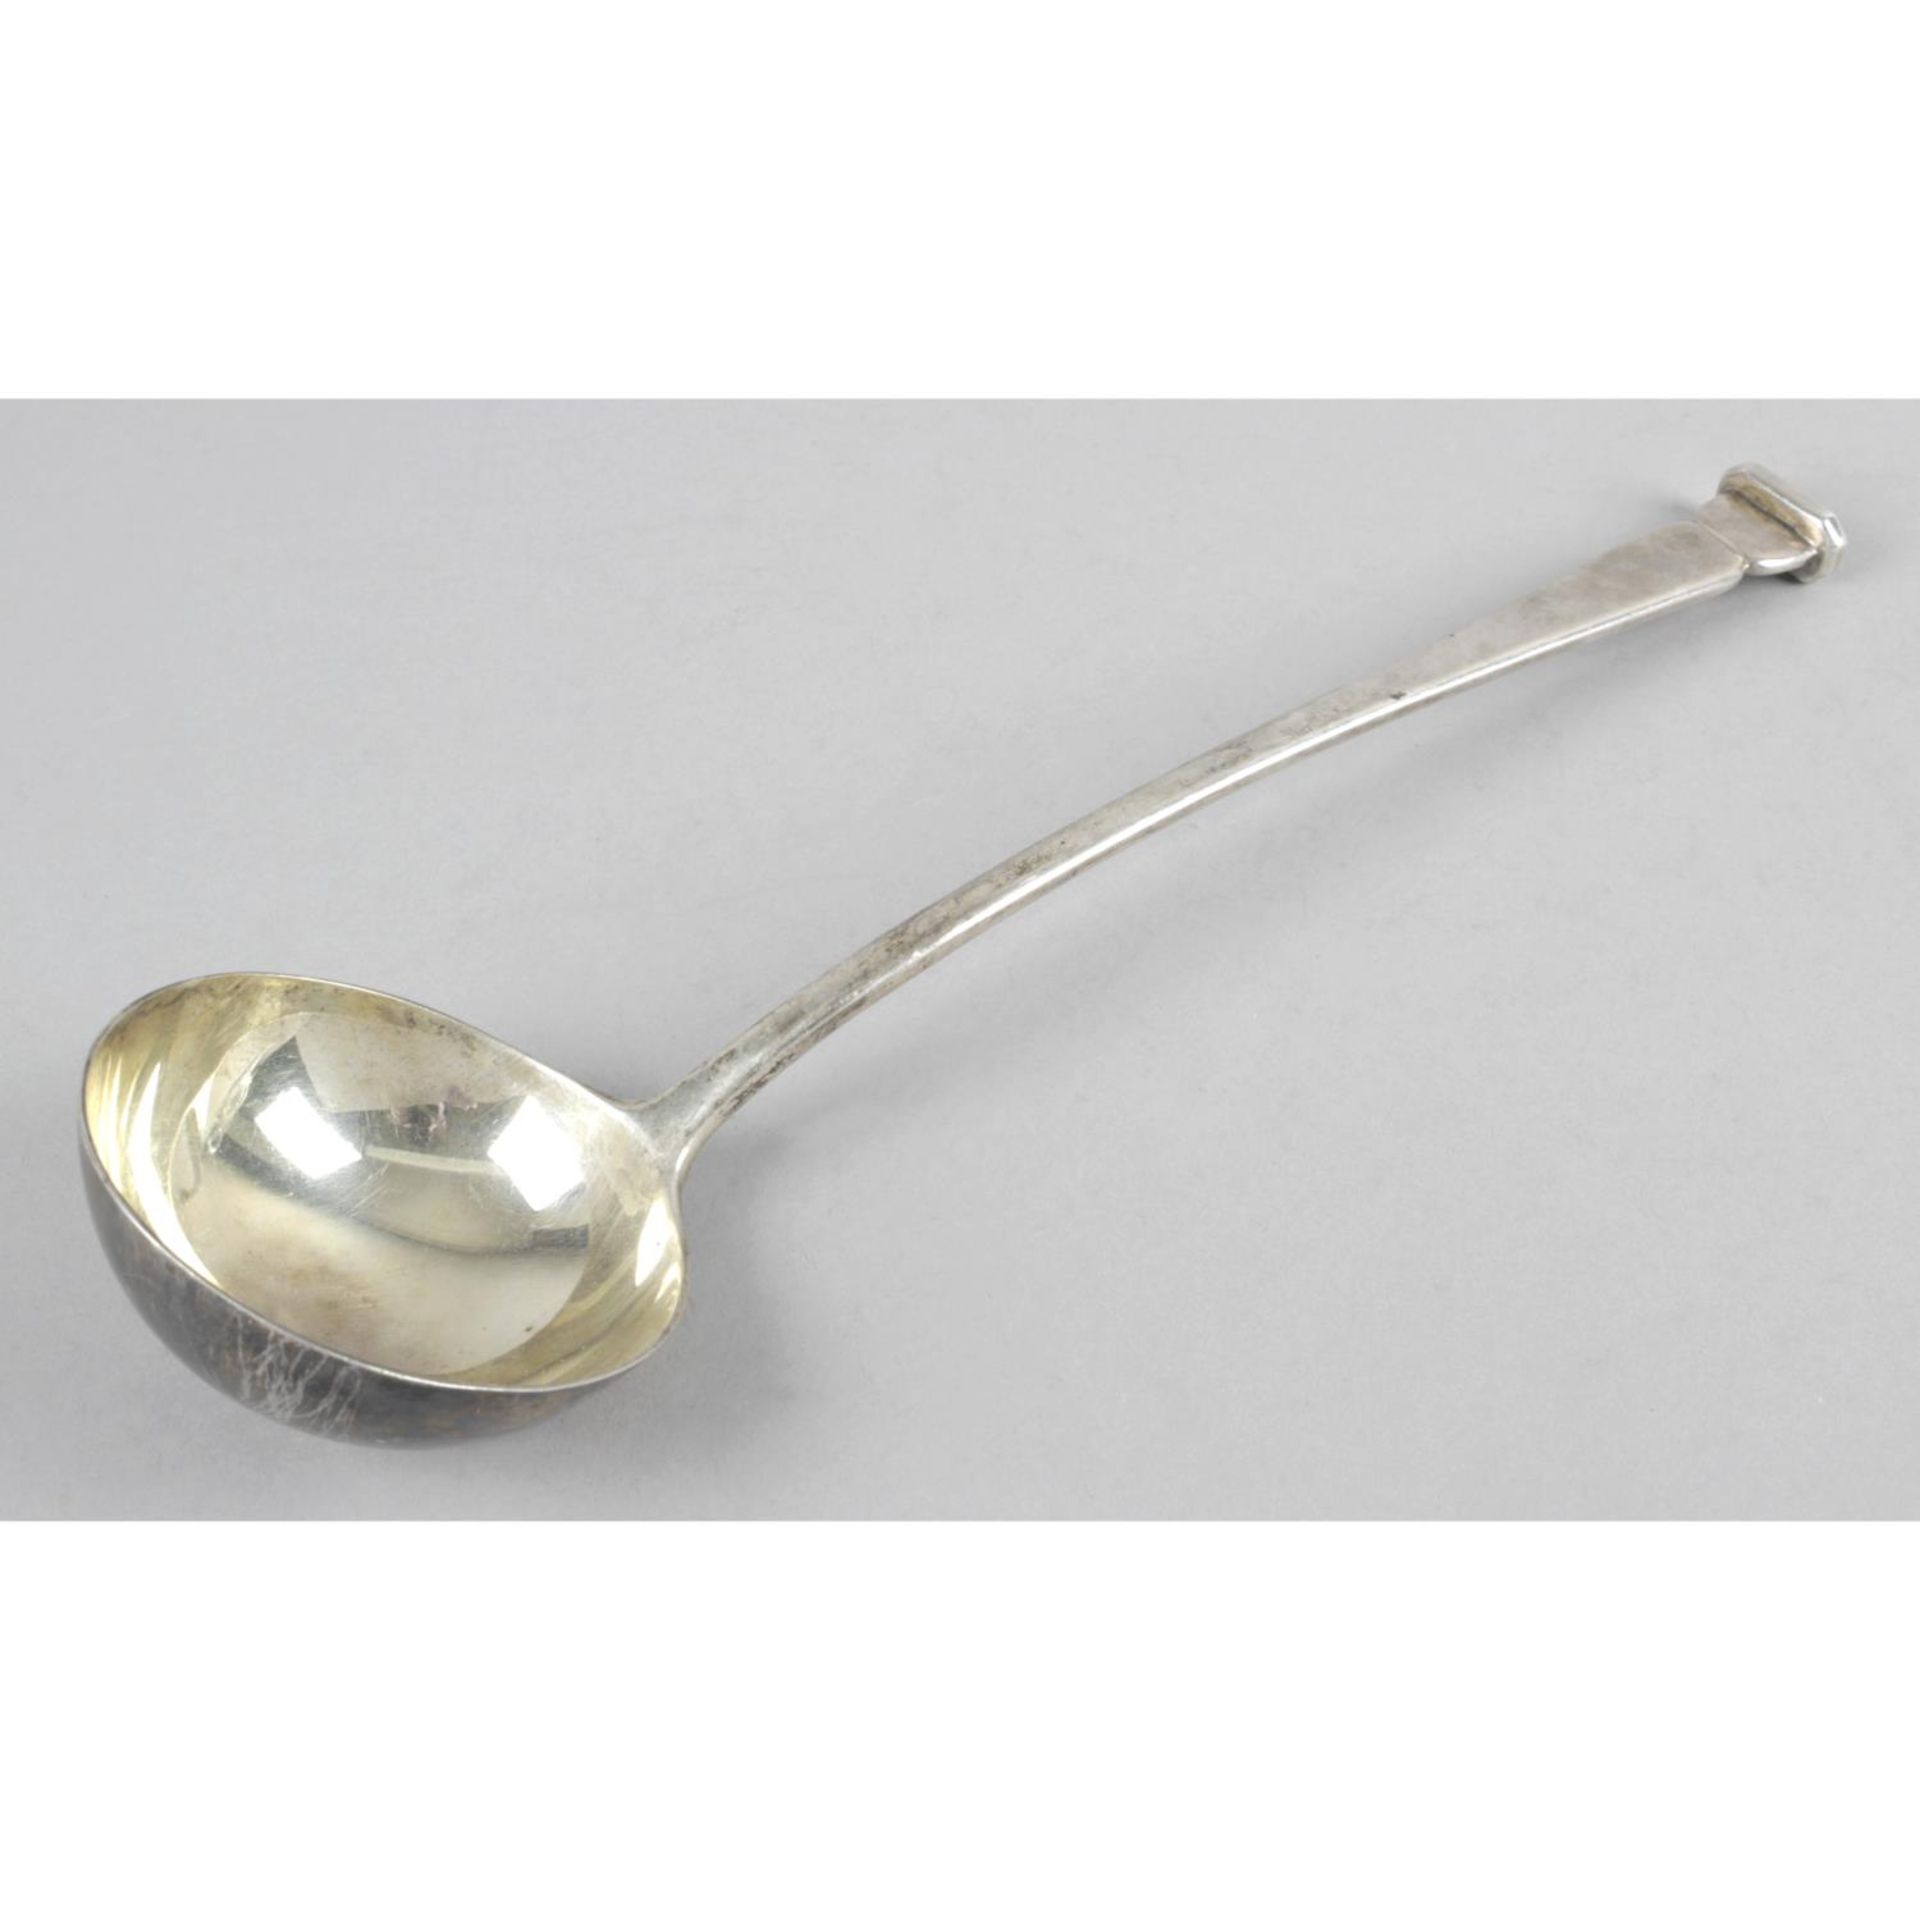 A George V silver soup ladle,